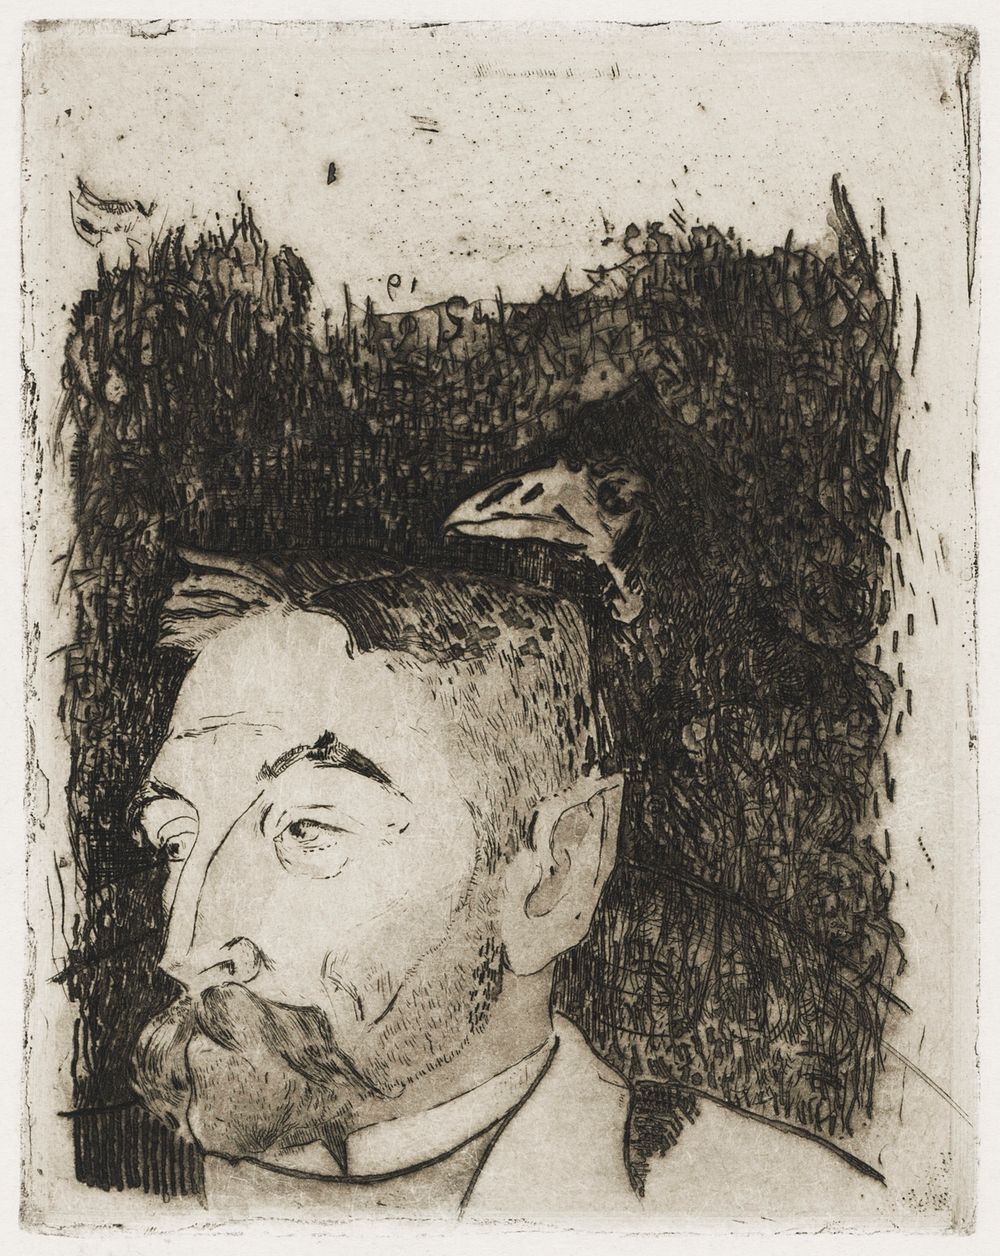 Portrait of St&eacute;phane Mallarm&eacute; (ca. 1890) by Paul Gauguin. Original from The Rijksmuseum. Digitally enhanced by…